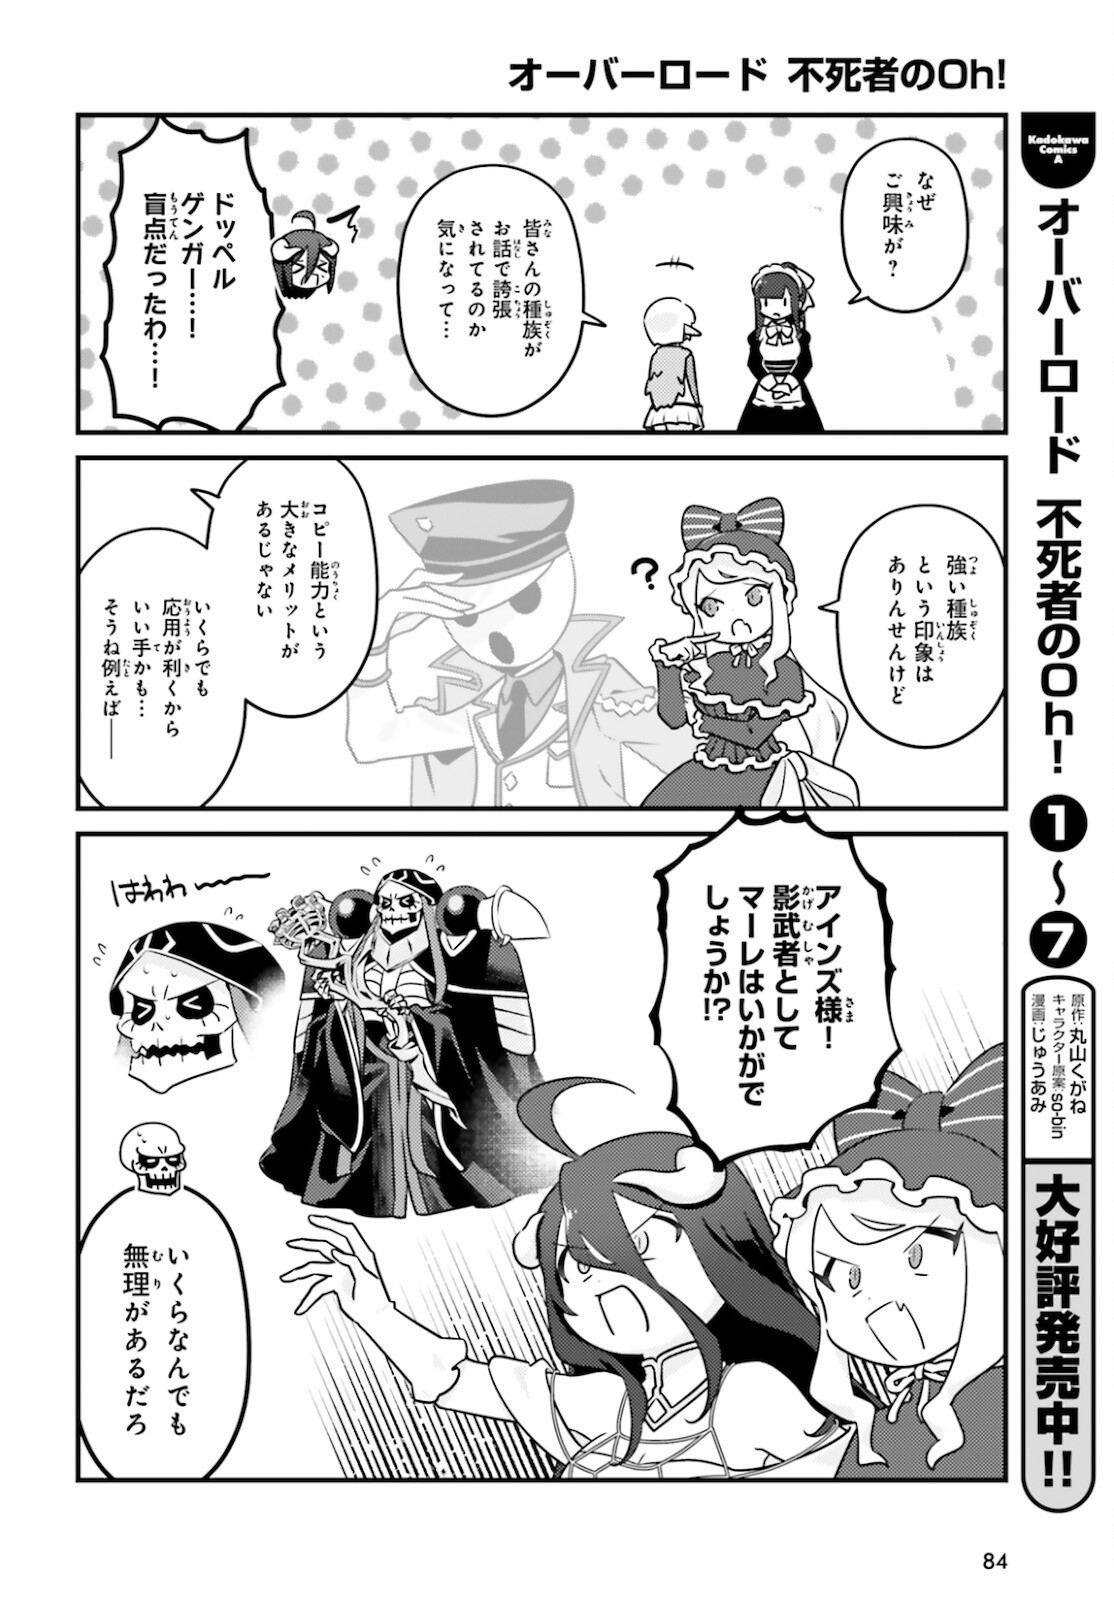 Overlord-Fushisha-no-Oh - Chapter 48 - Page 18